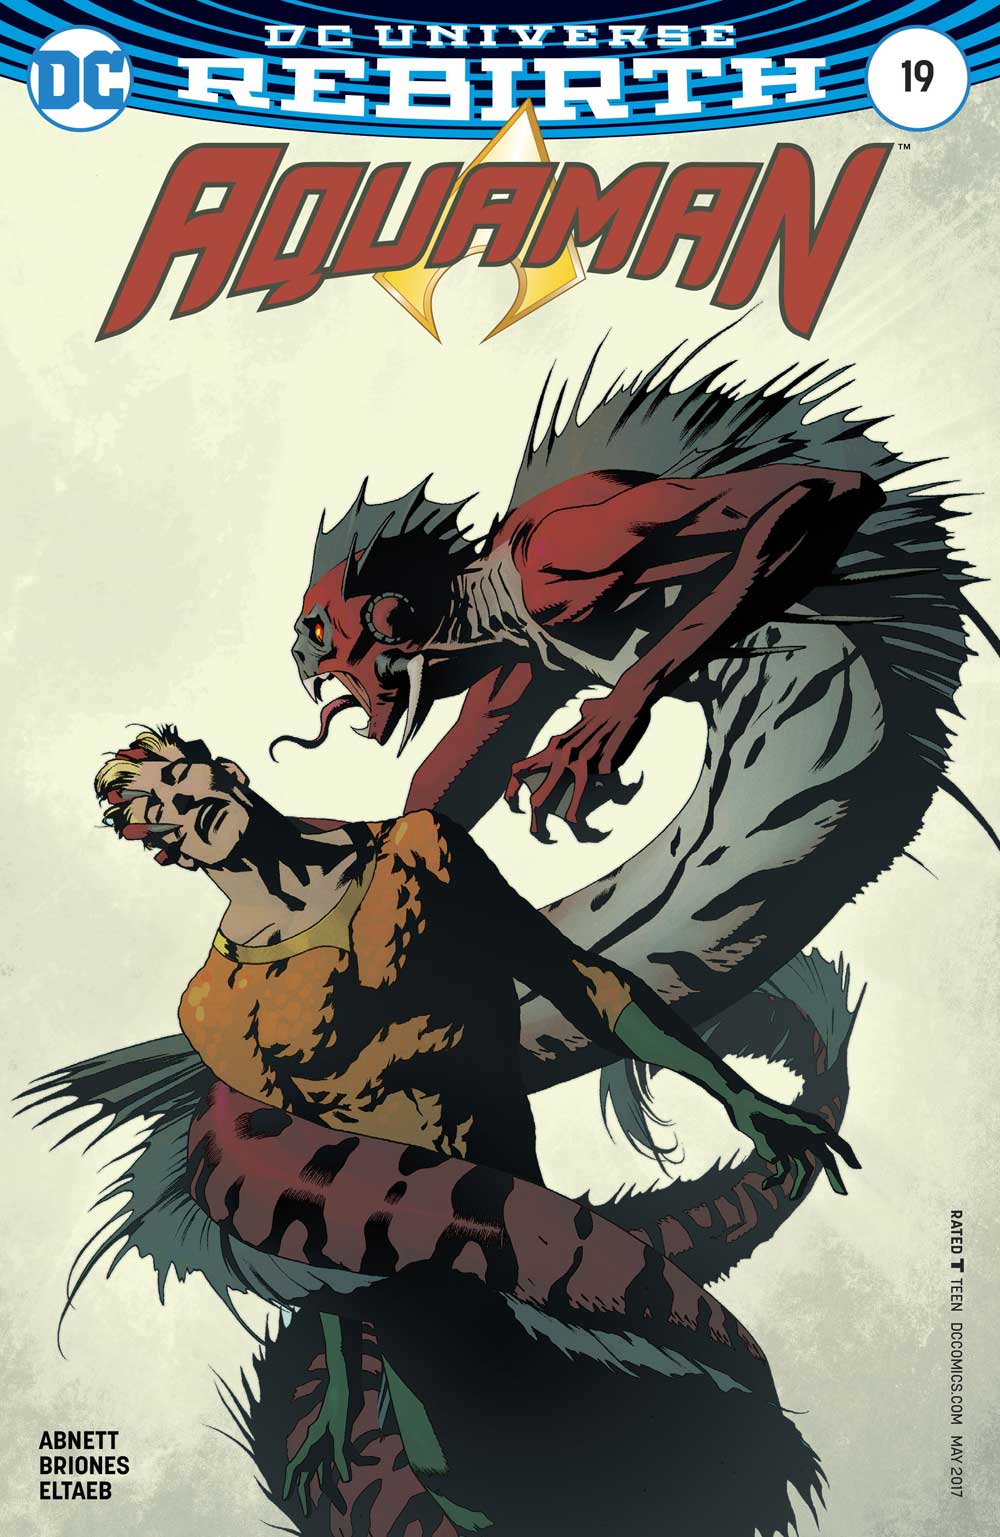 Aquaman #19 Variant cover by Joshua Middleton